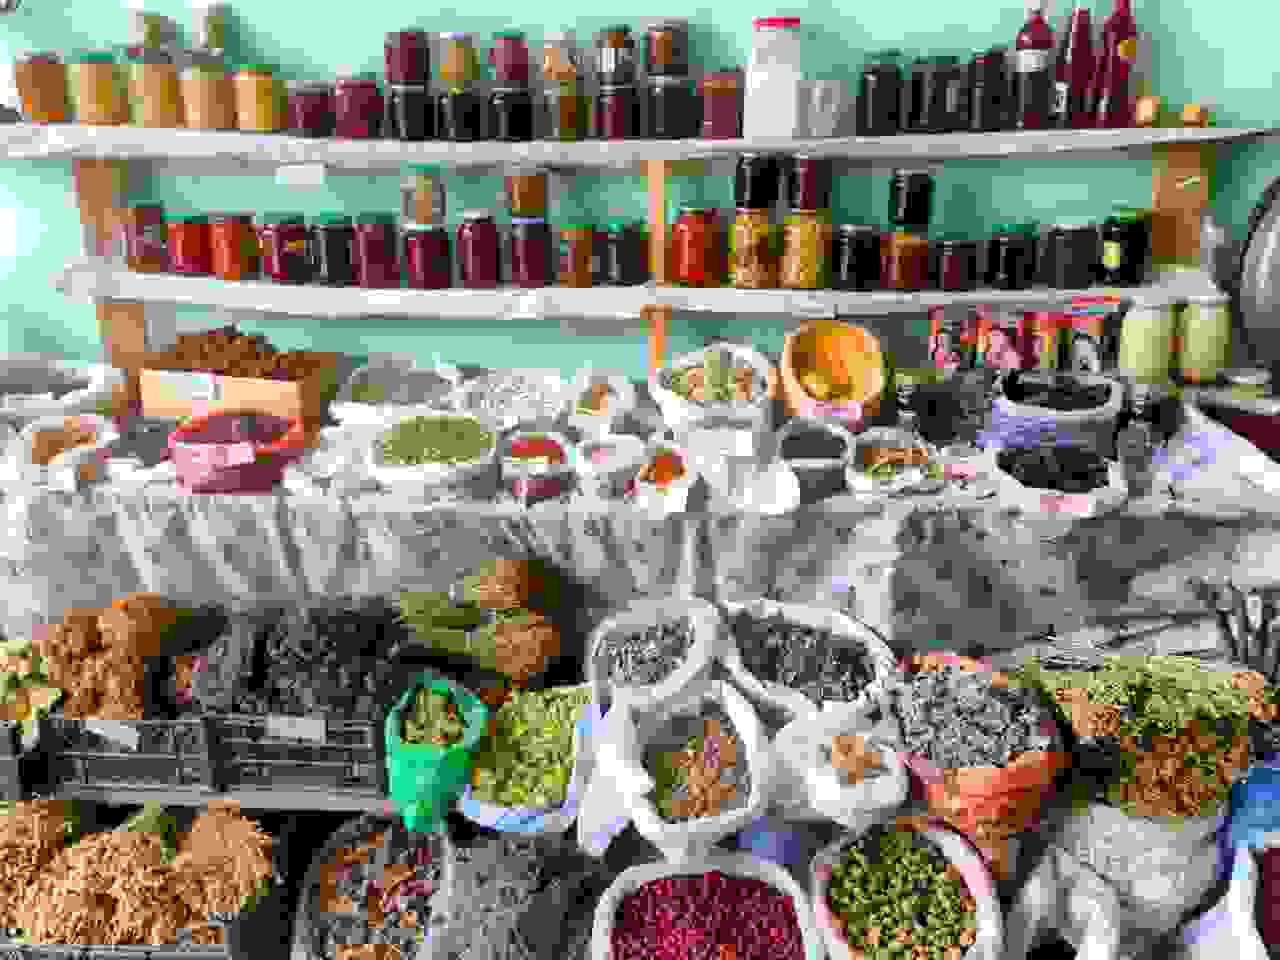 Azerbaijan spice market